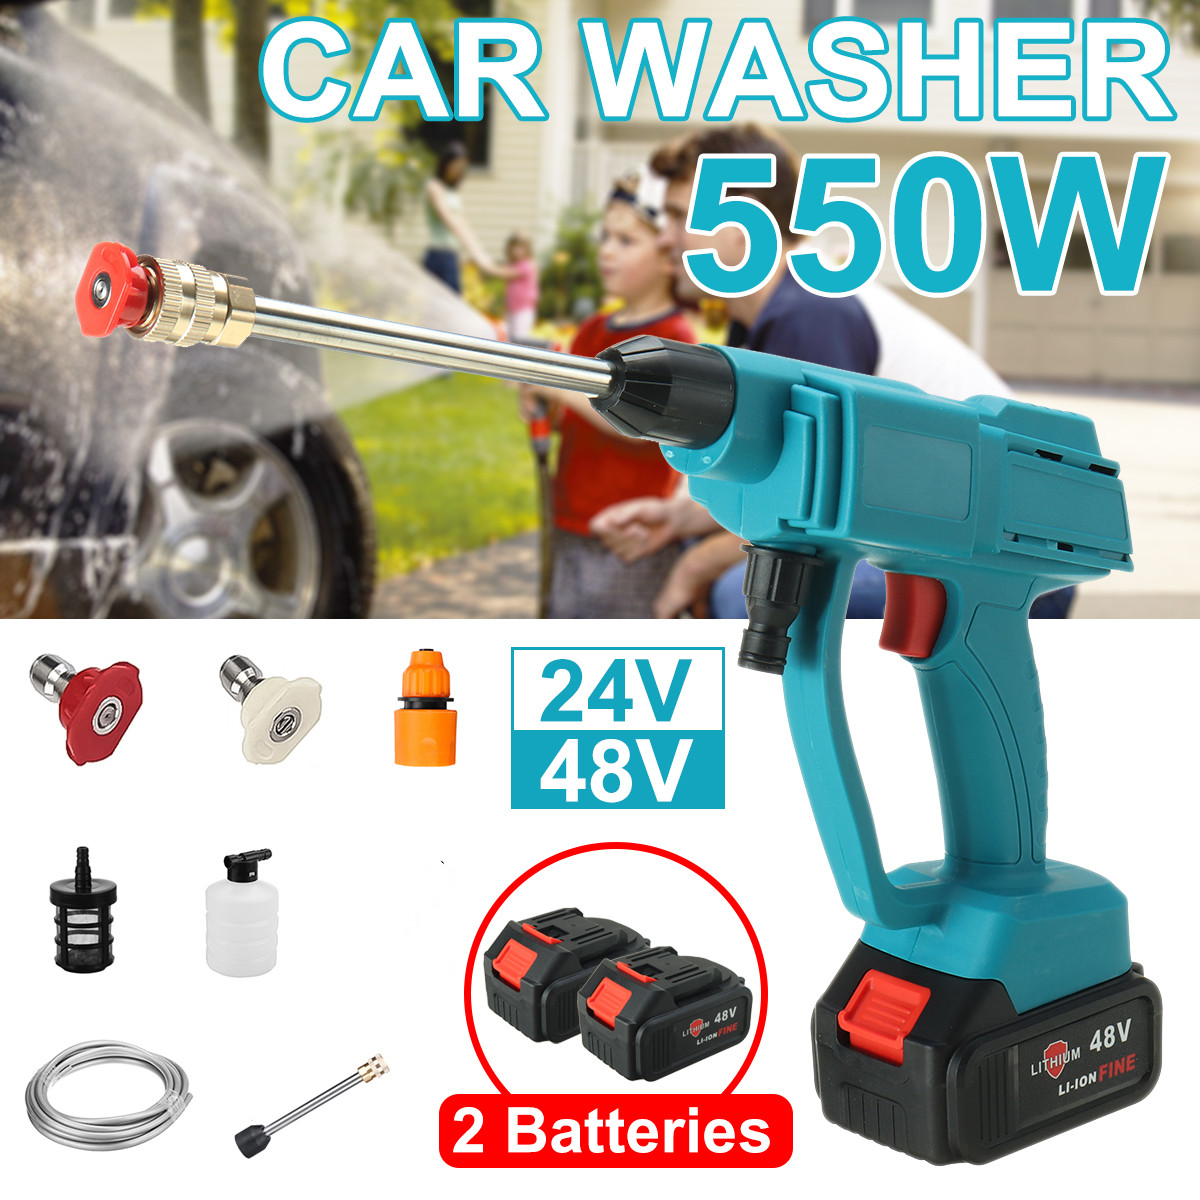 2448V-550W-Cordless-Electric-High-Pressure-Washer-Car-Washing-Machine-Spray-Guns-Lance-Hose-Set-W-12-1870567-1